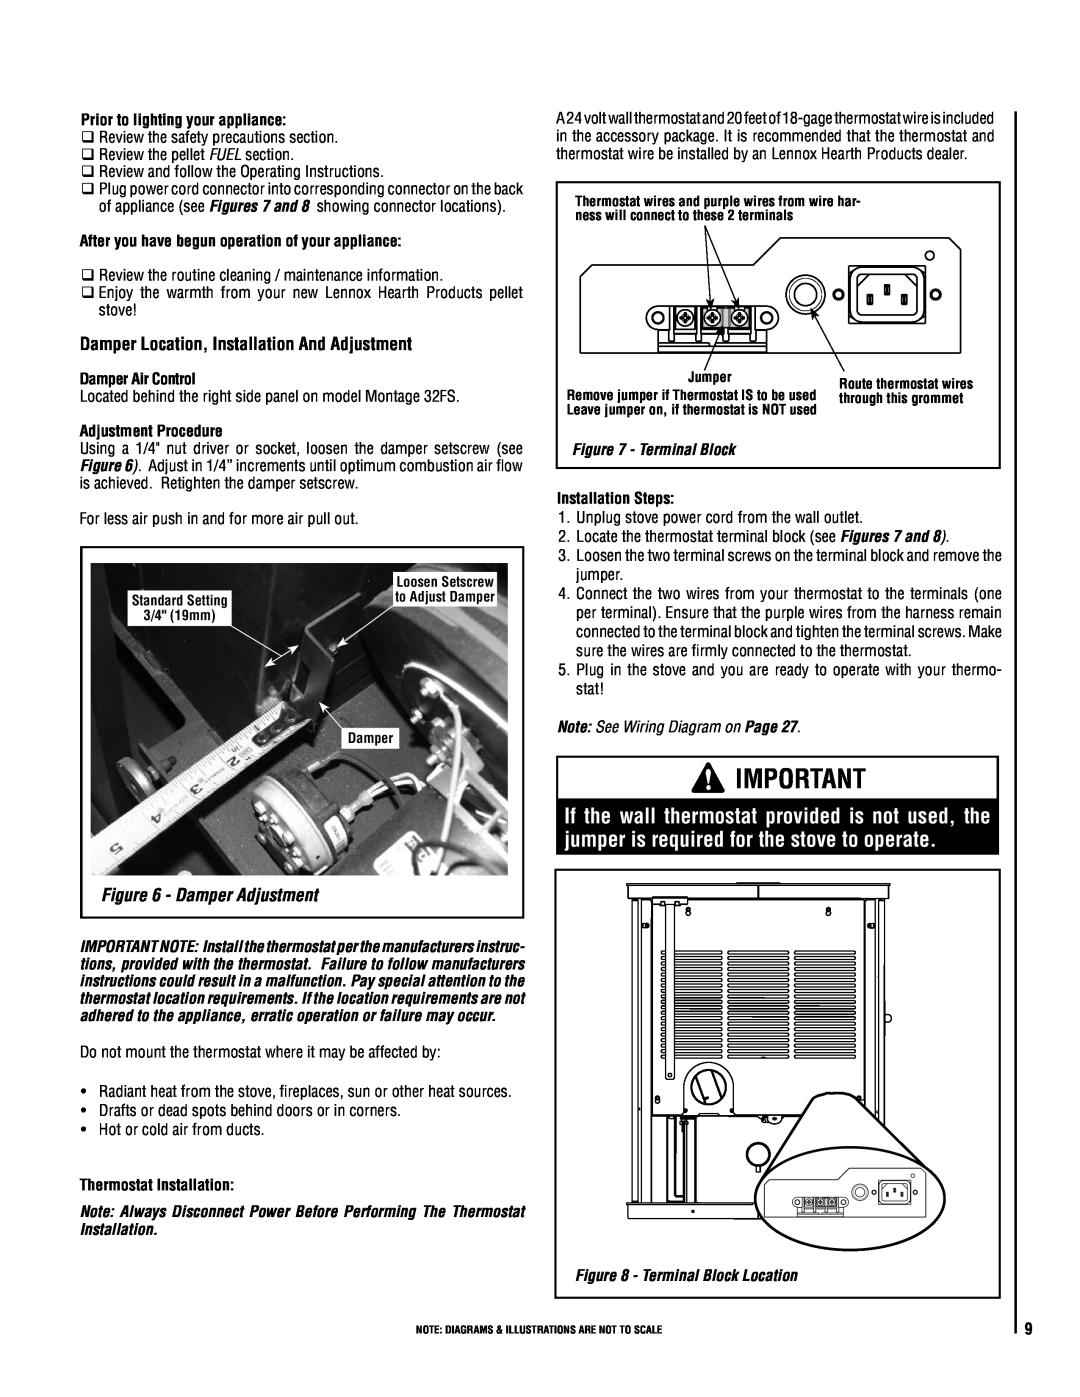 Lennox Hearth 32FS Damper Location, Installation And Adjustment, Damper Adjustment, Prior to lighting your appliance 